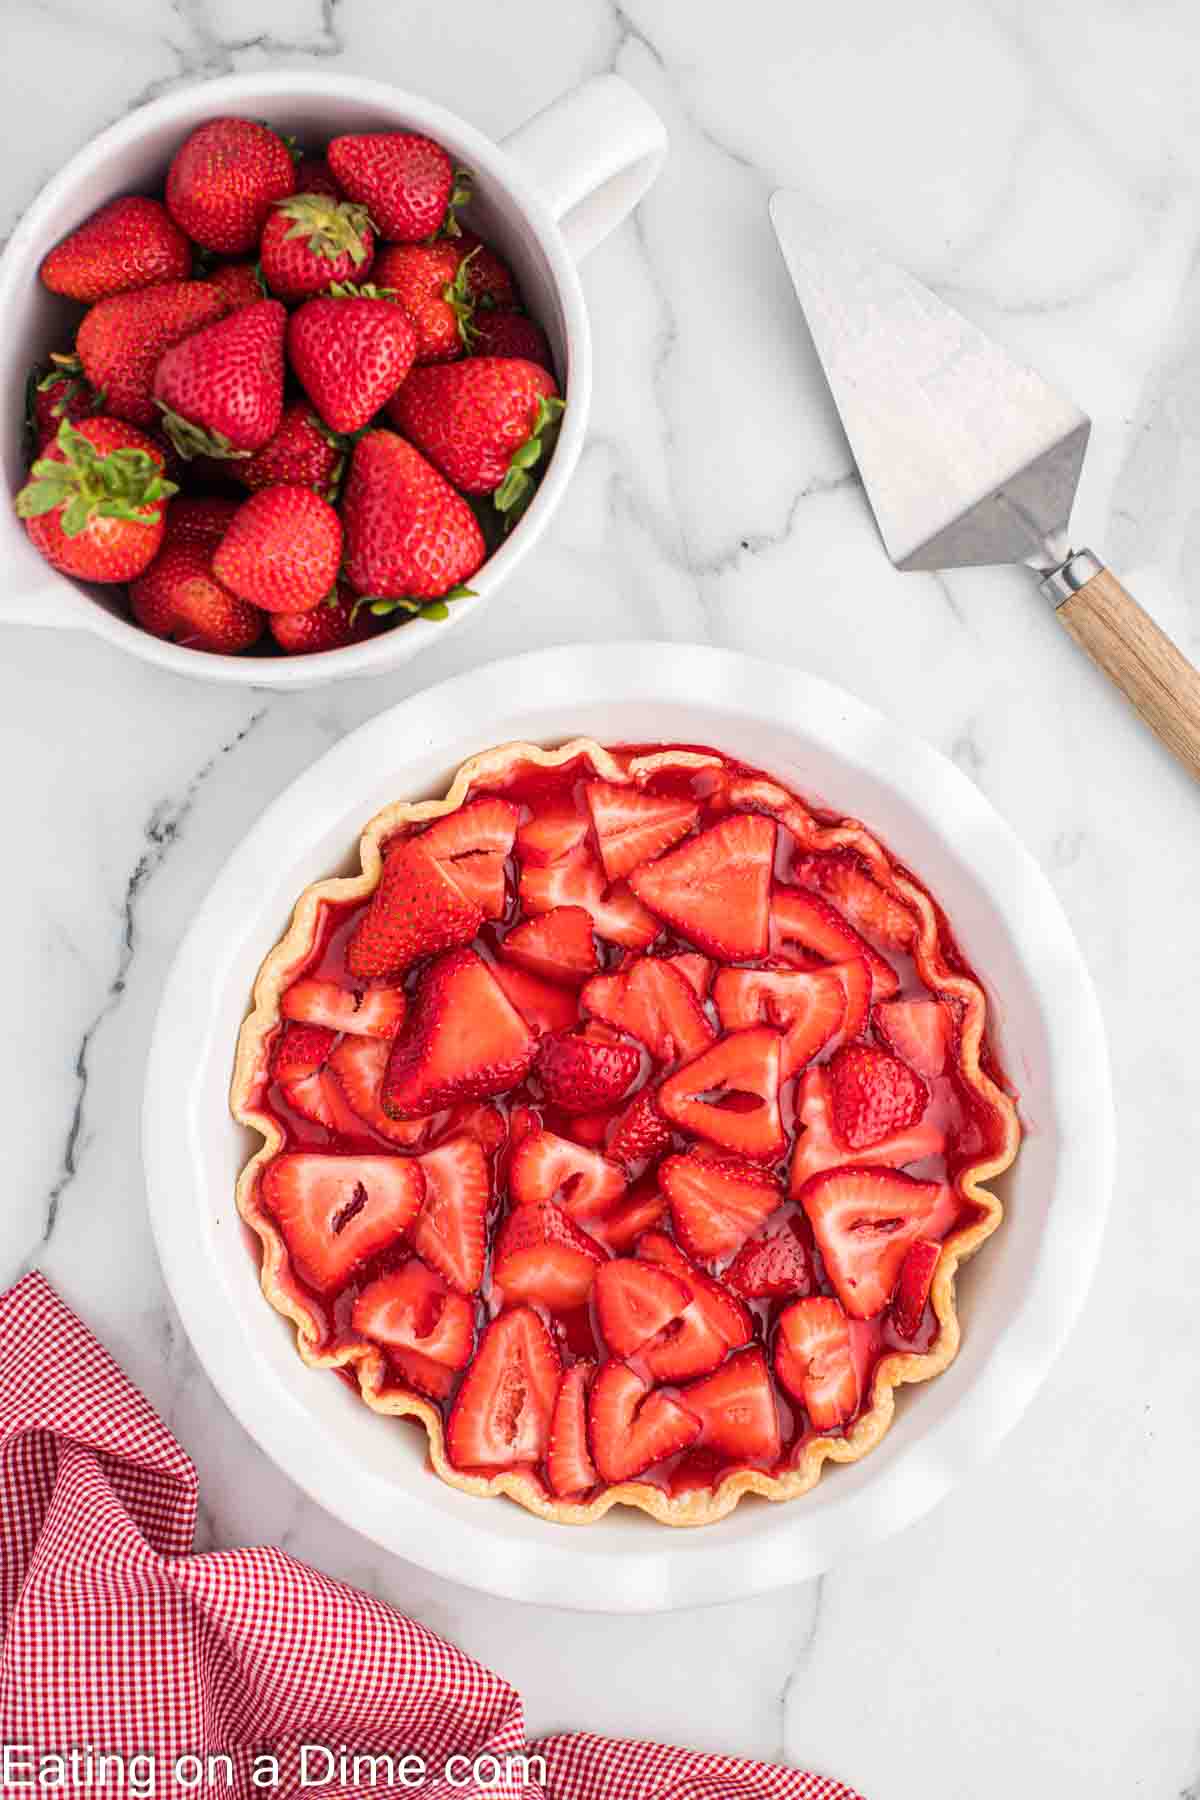 Strawberry pie in a pie plate